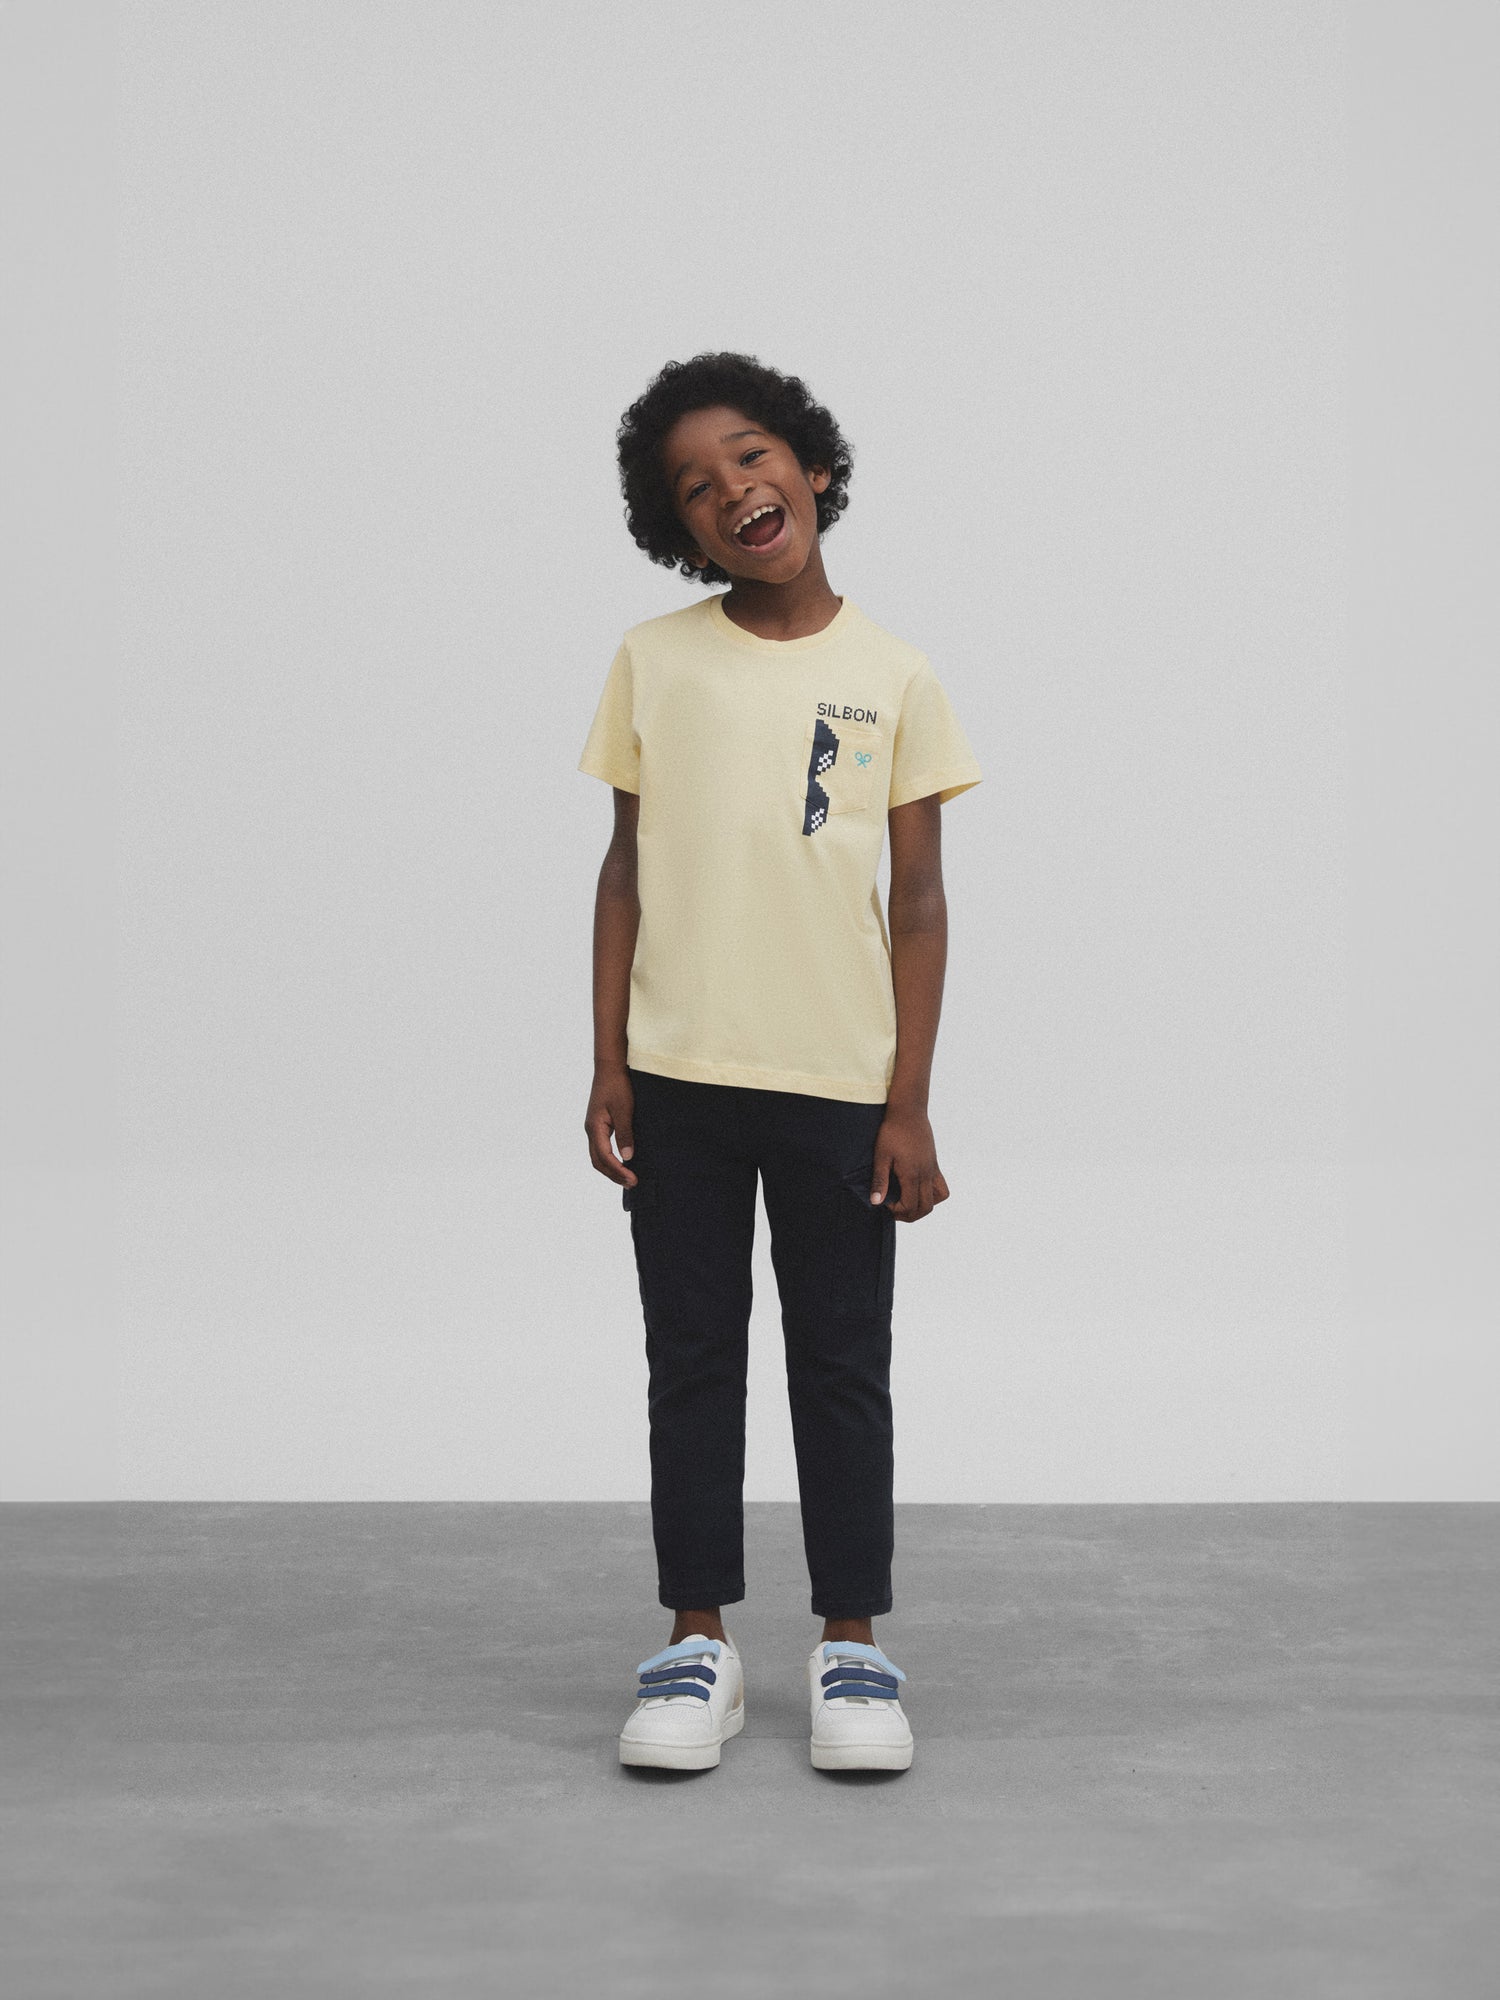 Camiseta kids thug life amarilla